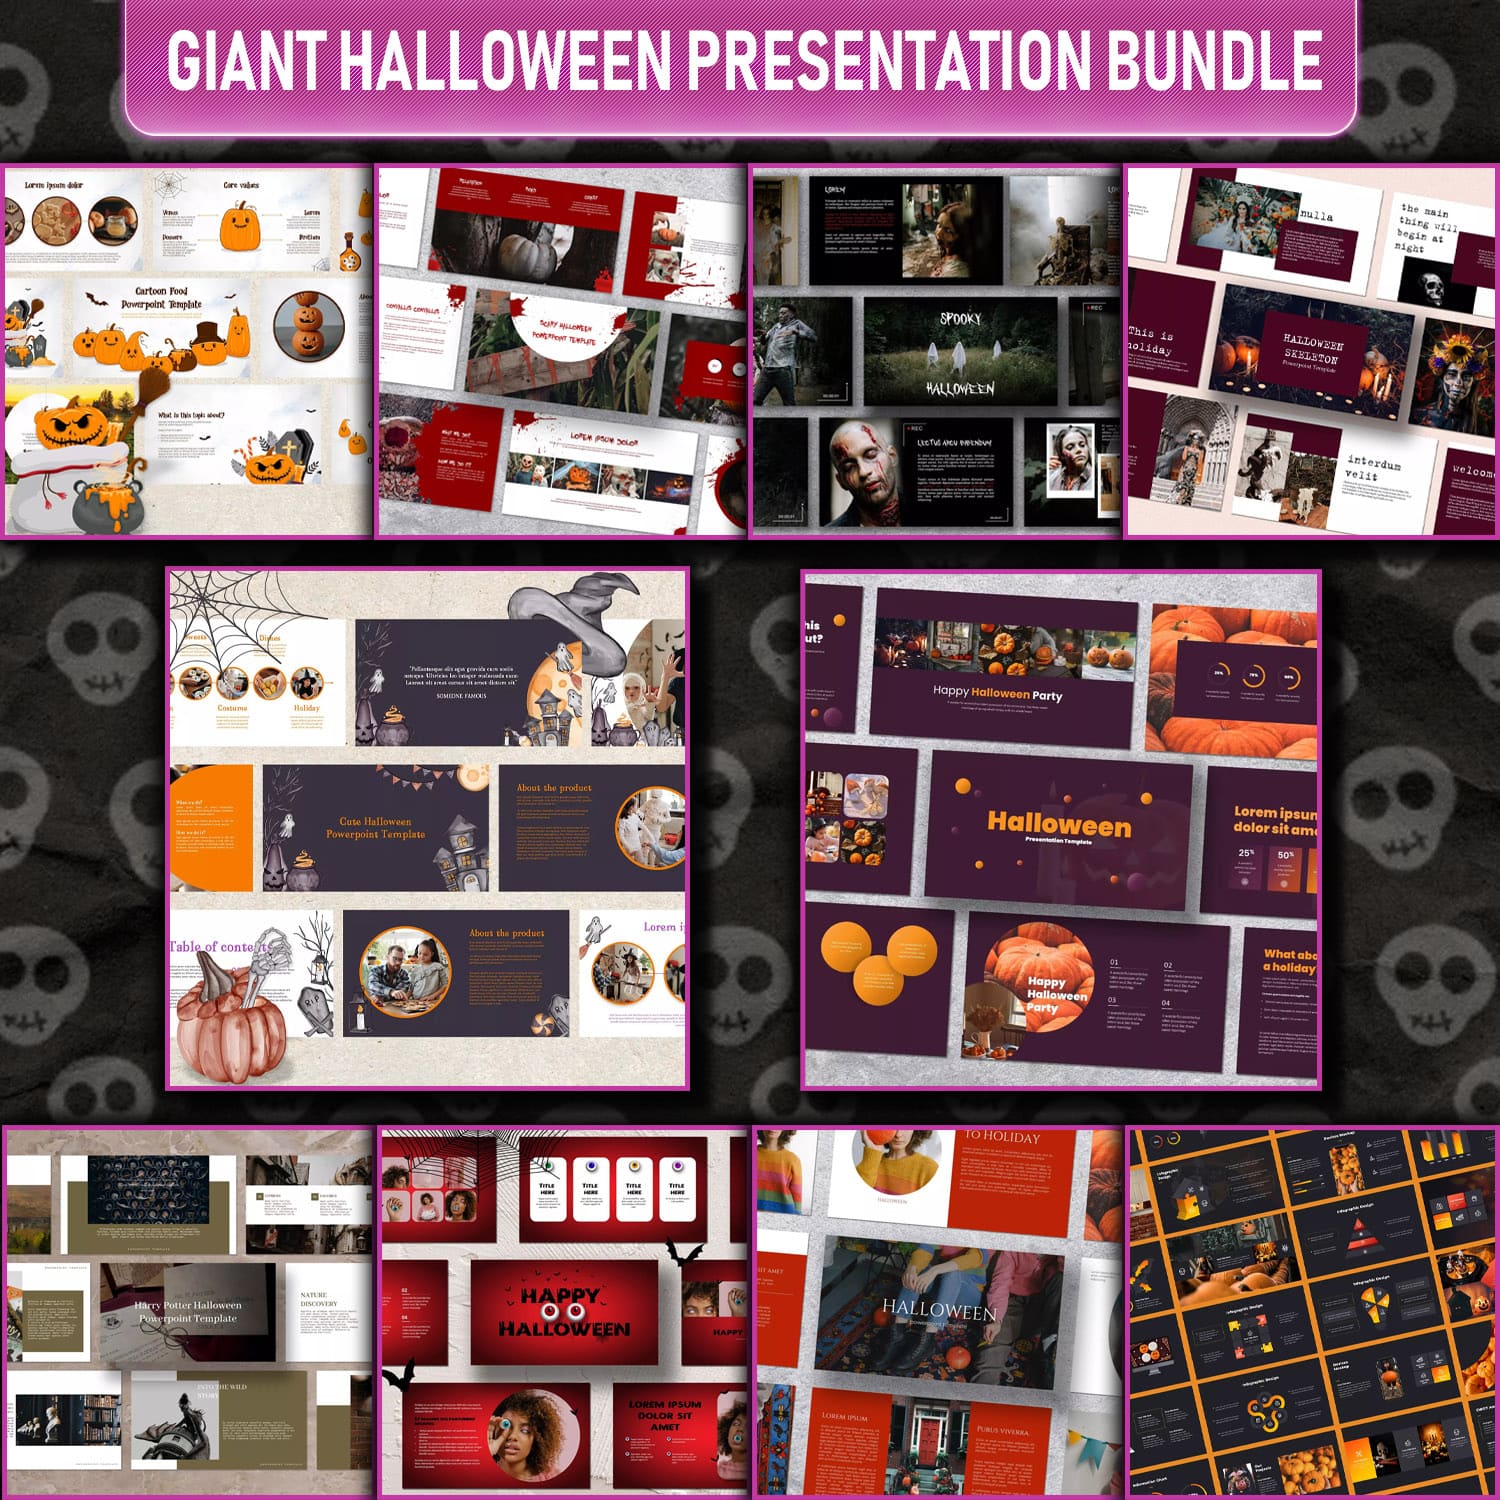 Giant Halloween Presentation Template Bundle cover image.